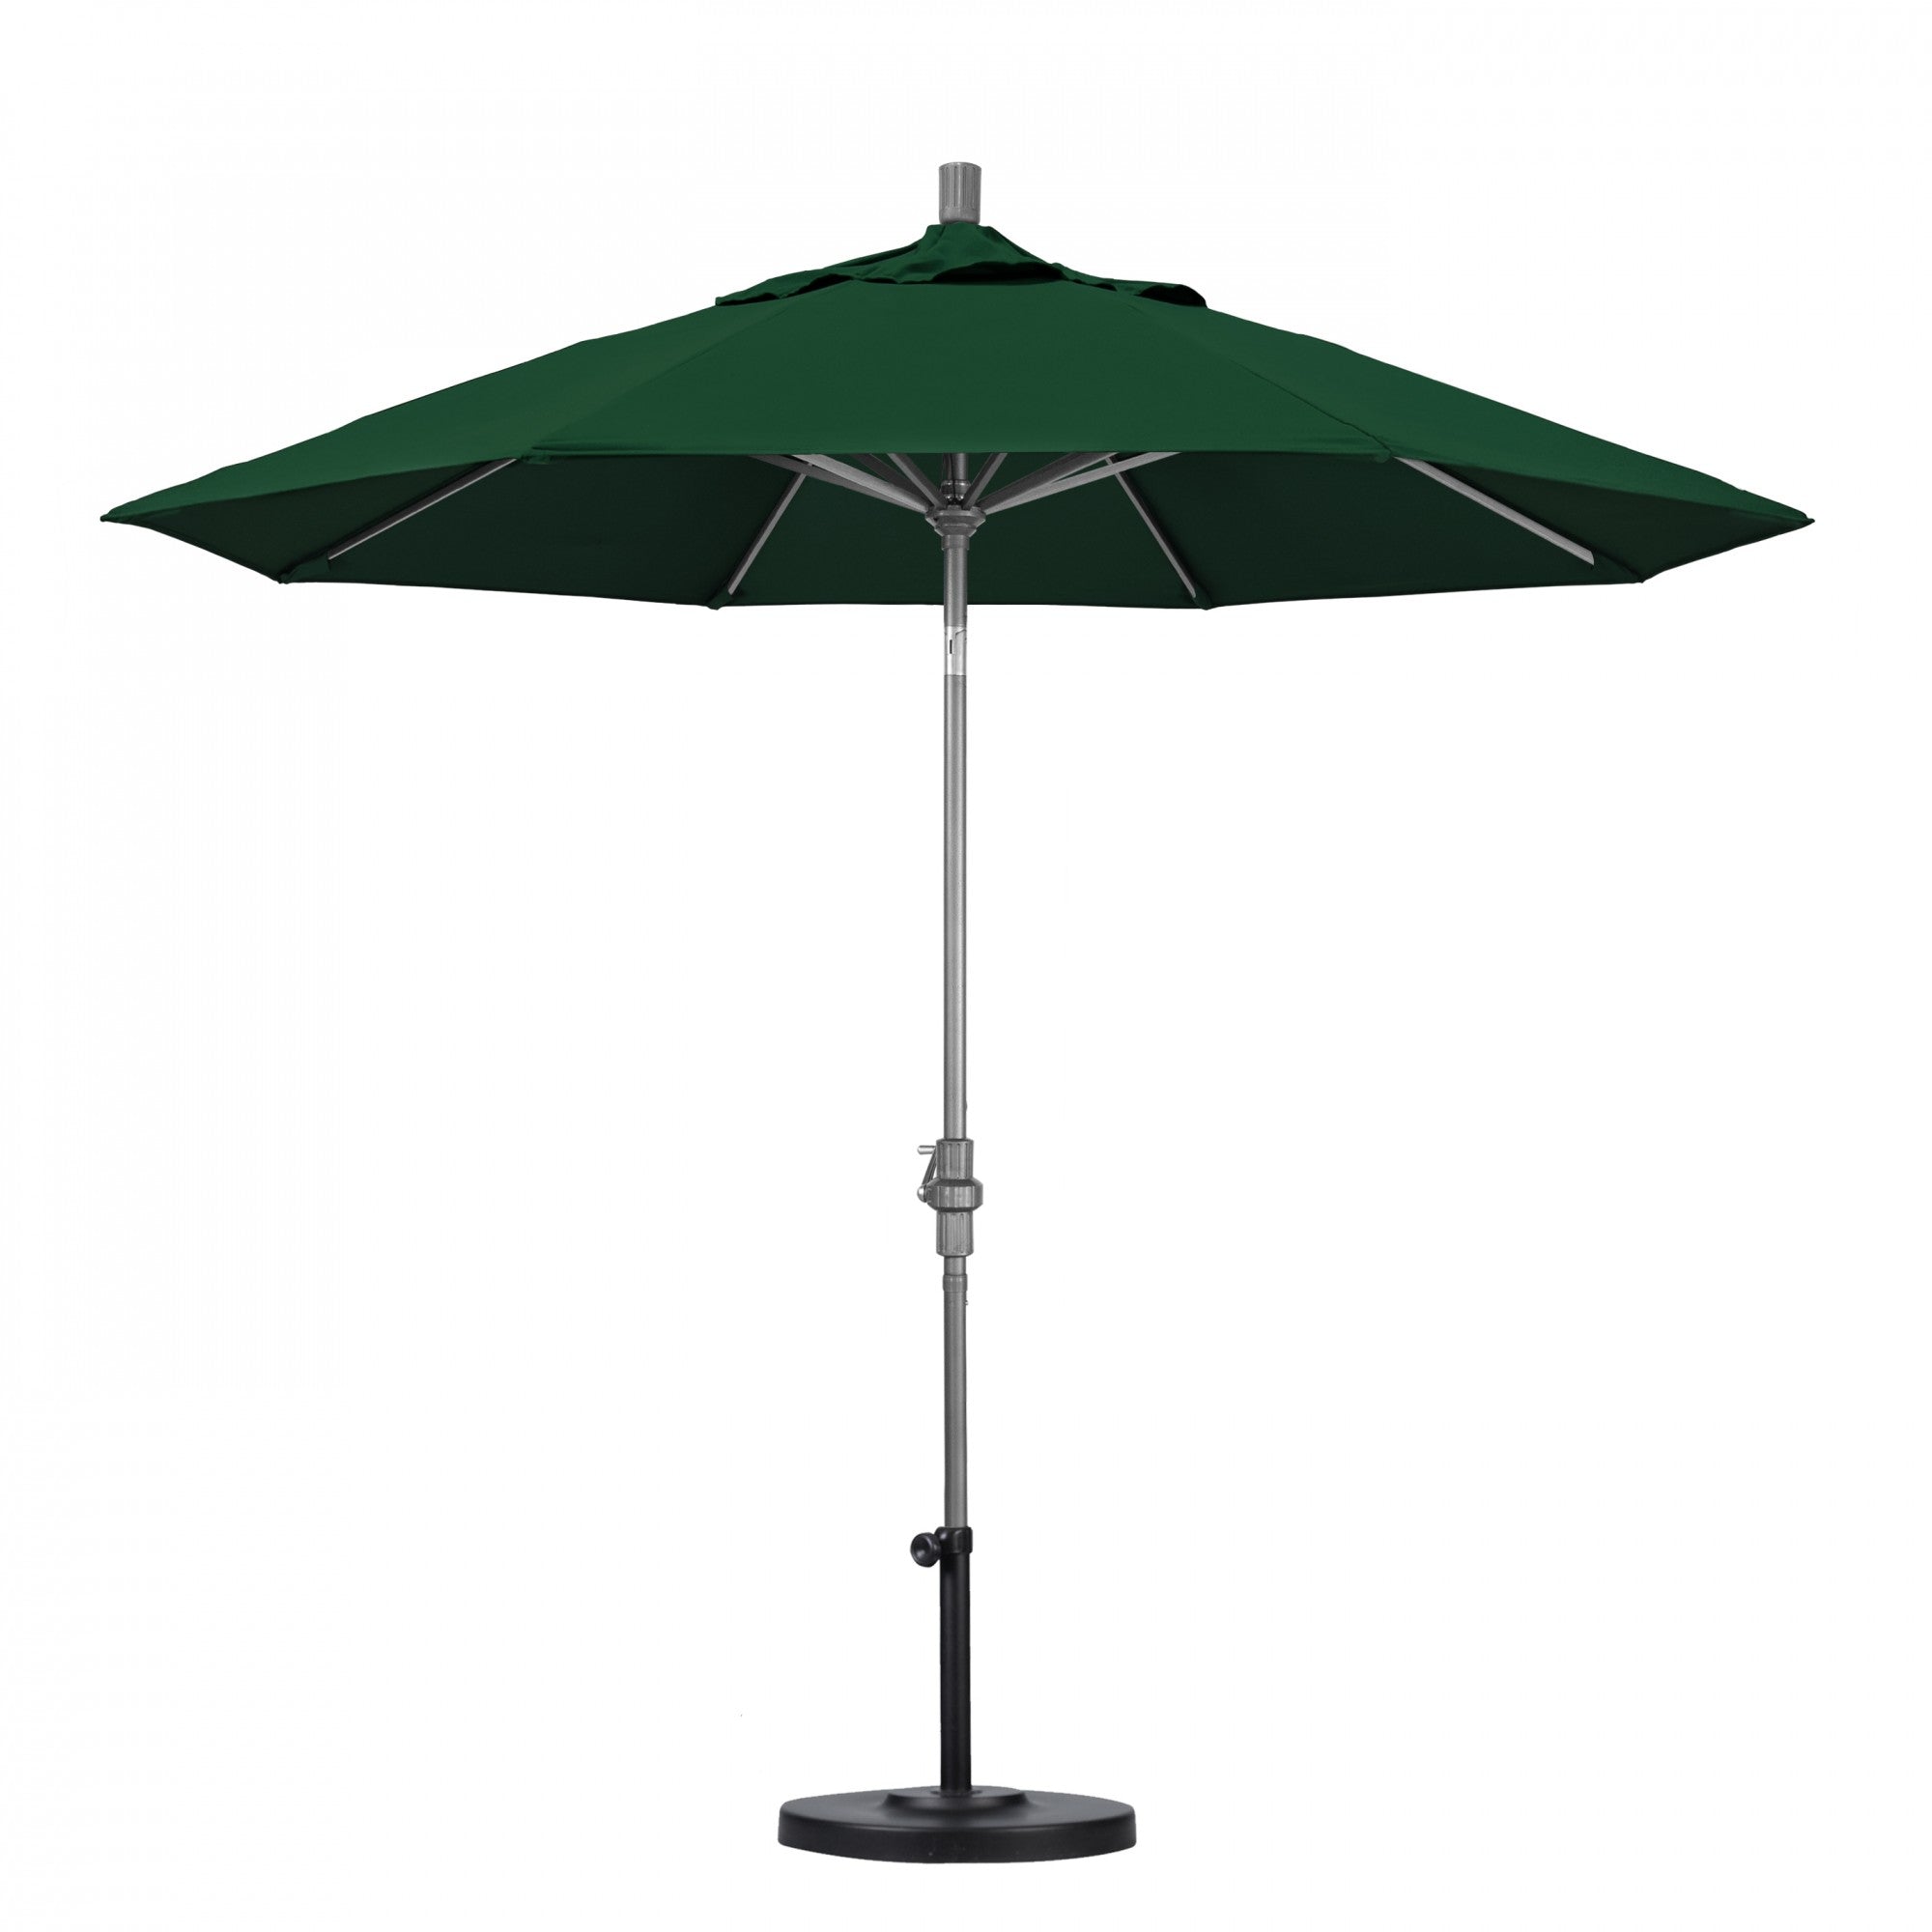 California Umbrella - 9' - Patio Umbrella Umbrella - Aluminum Pole - Hunter Green - Olefin - GSCUF908010-F08